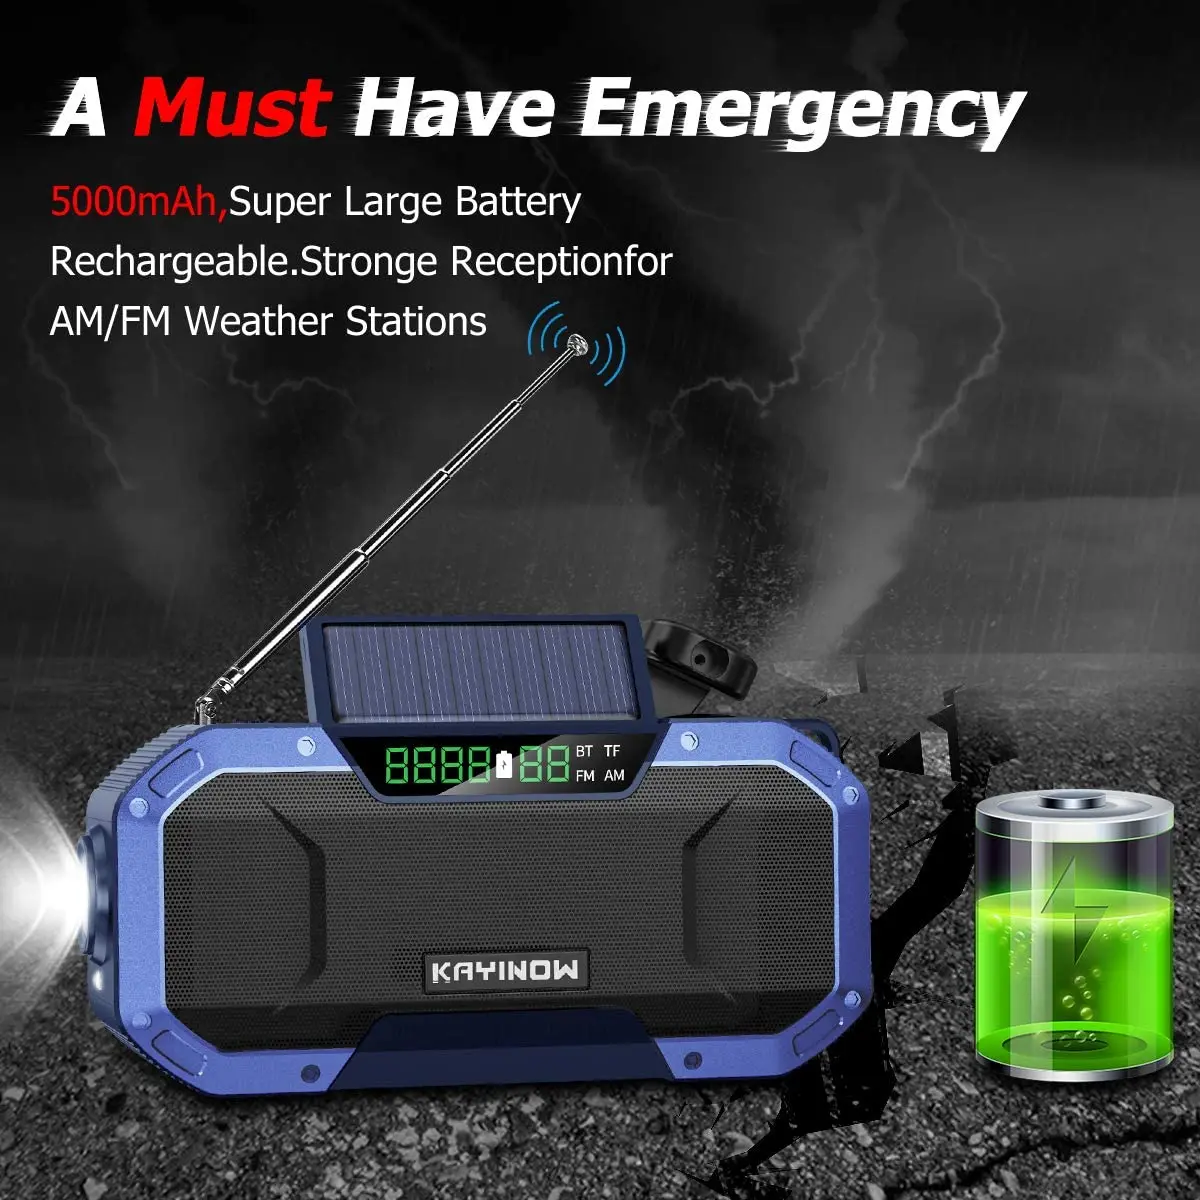 
KAYINOW Emergency AM/FM Hand-Crank Radio with Bright Flashlight, SOS Alarm and 5000mAh Power Bank 